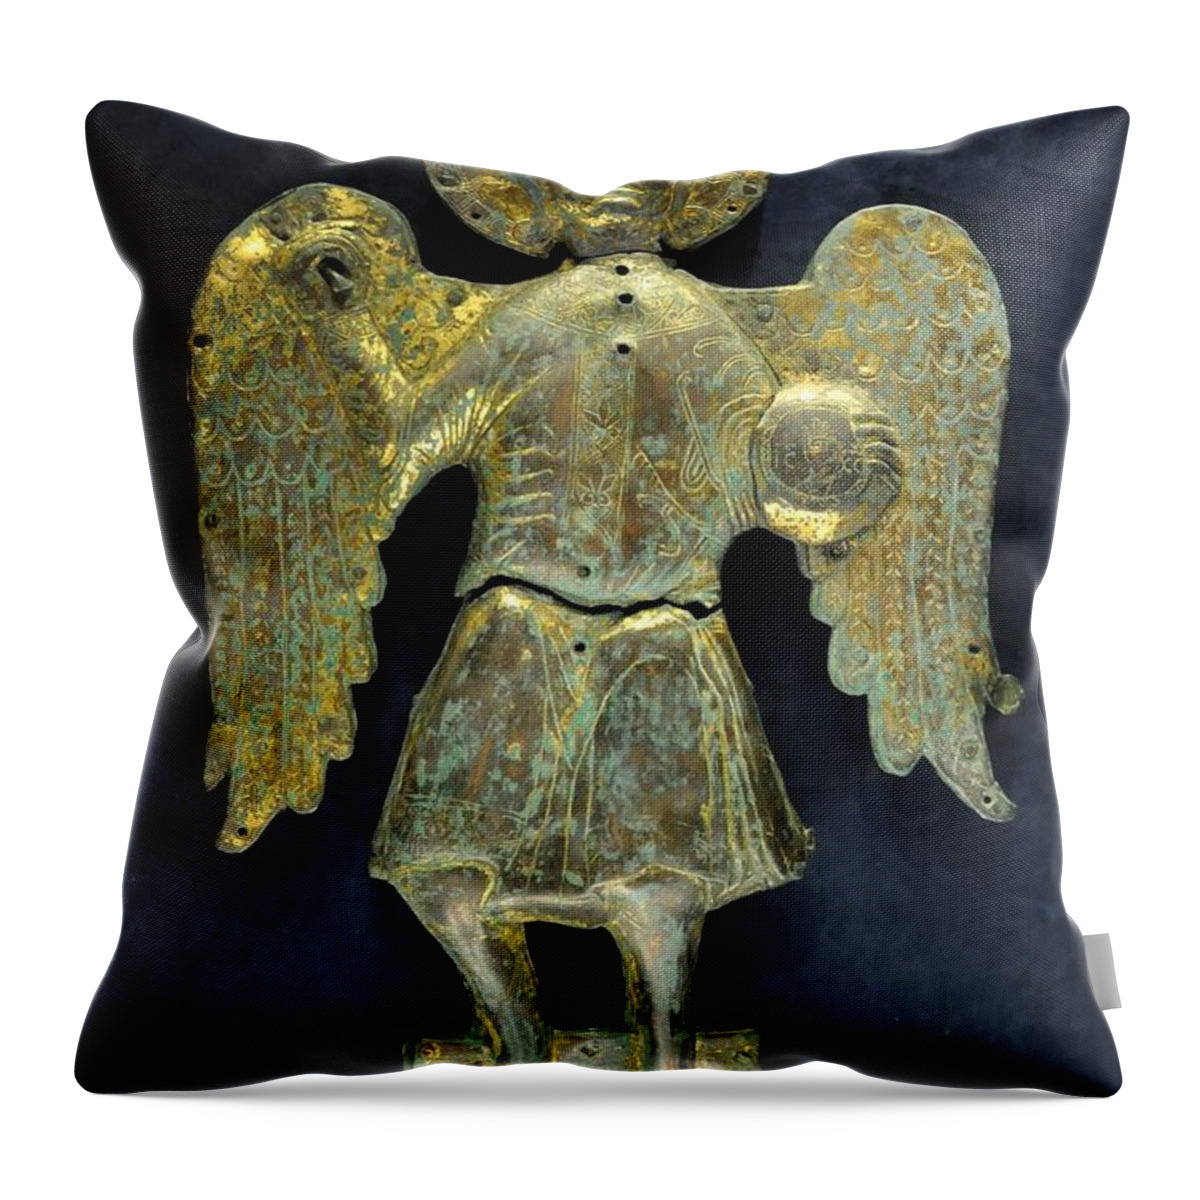 Michael Throw Pillow featuring the photograph Saint Michael the Archangel by Matteo TOTARO